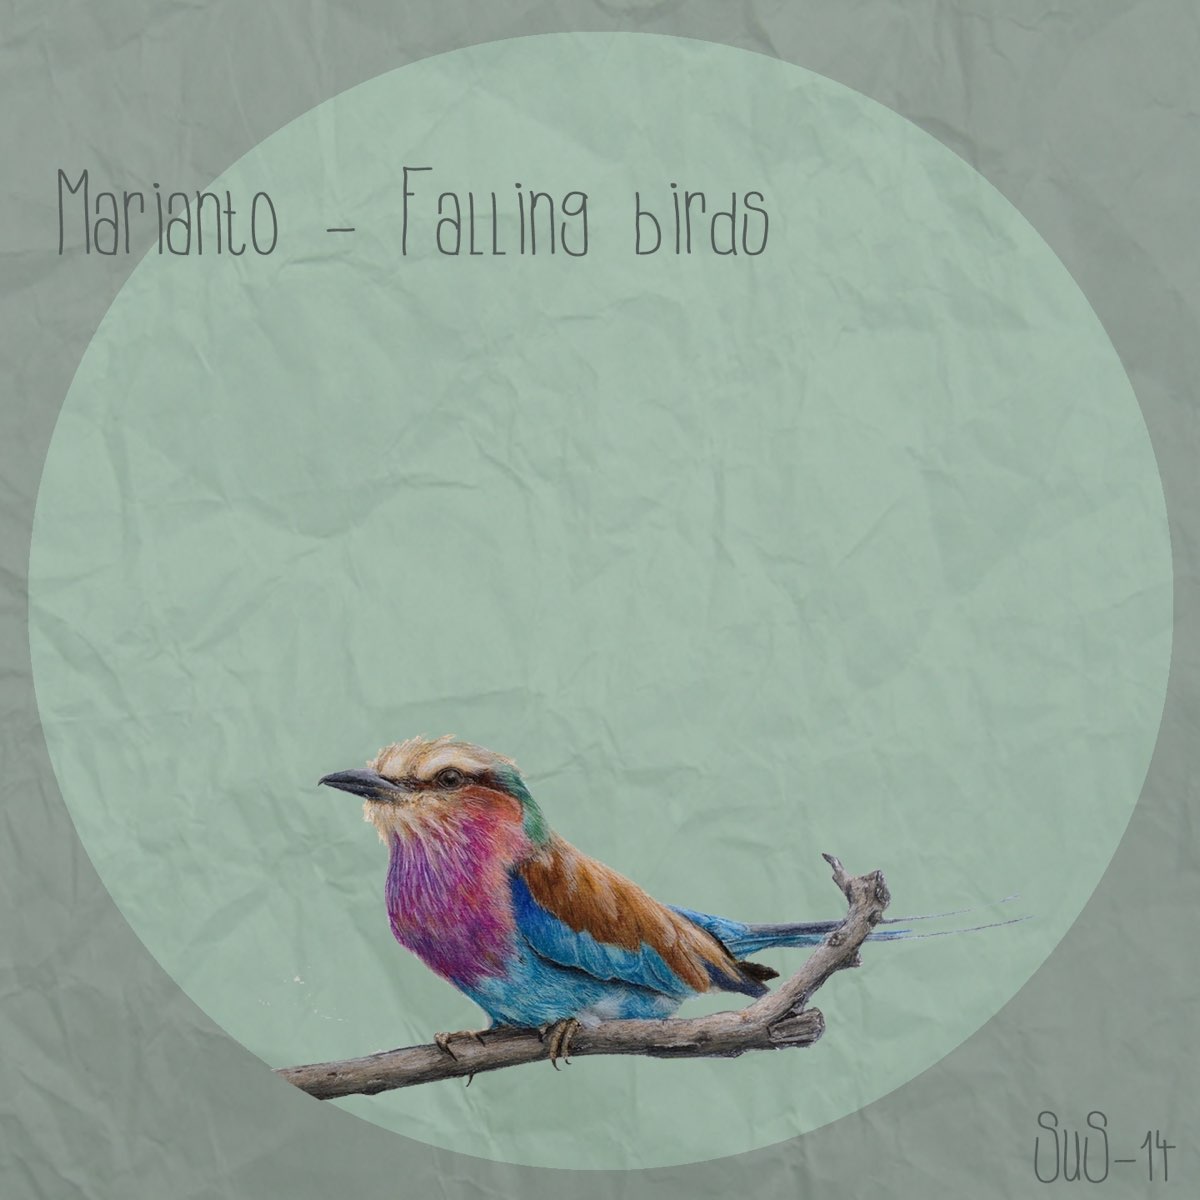 Falling bird. Fallen Bird Prince Canary. Birds text Creative.